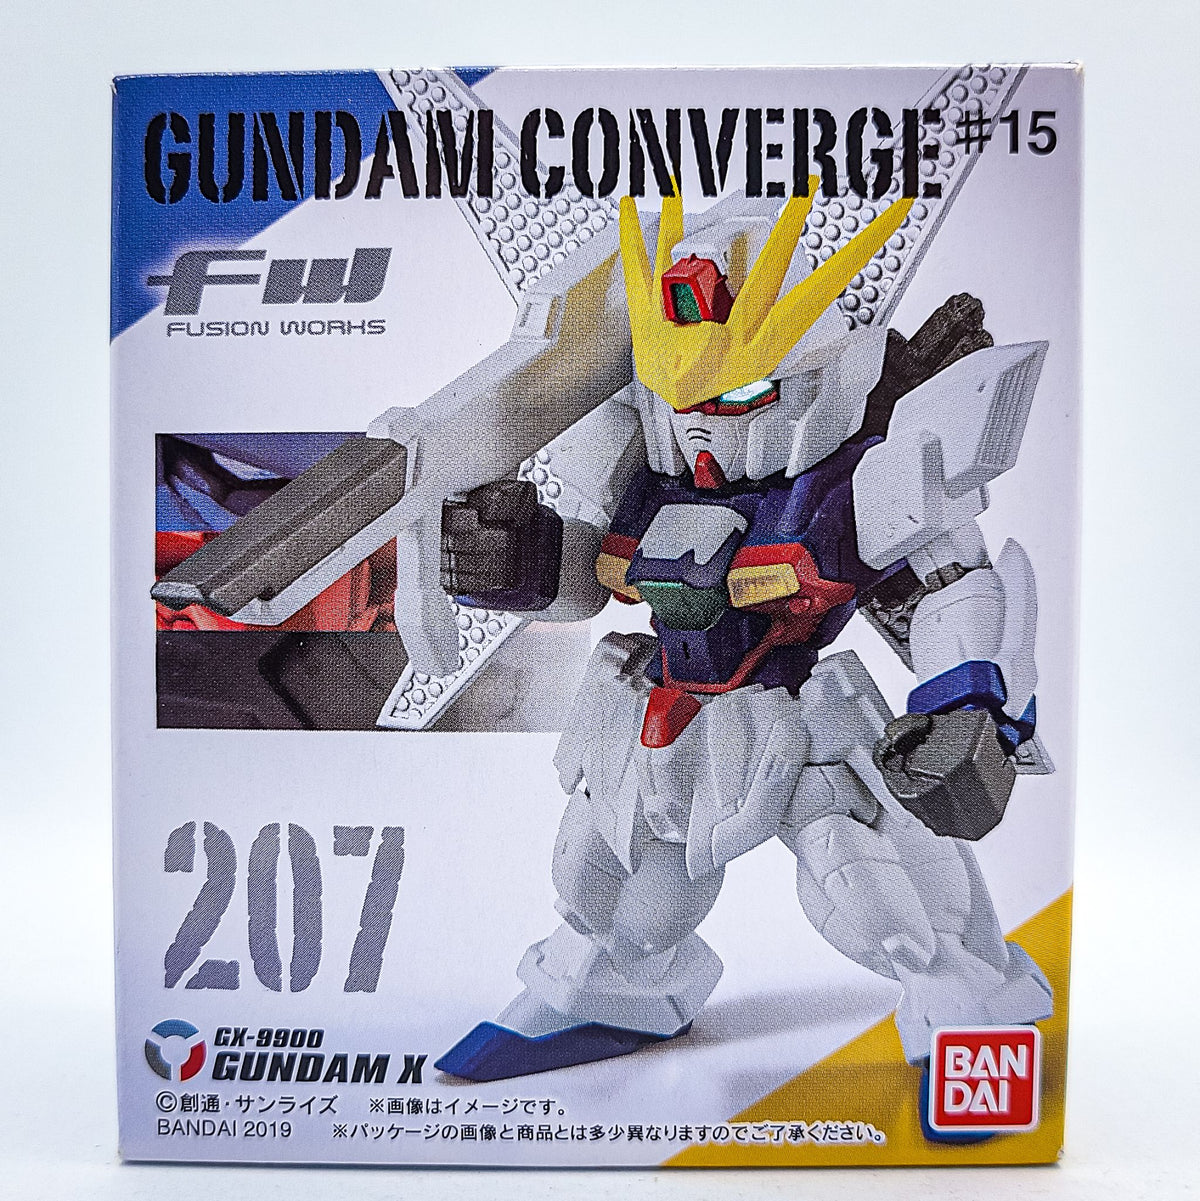 Gundam Converge #207 Gundam X by Bandai - 1